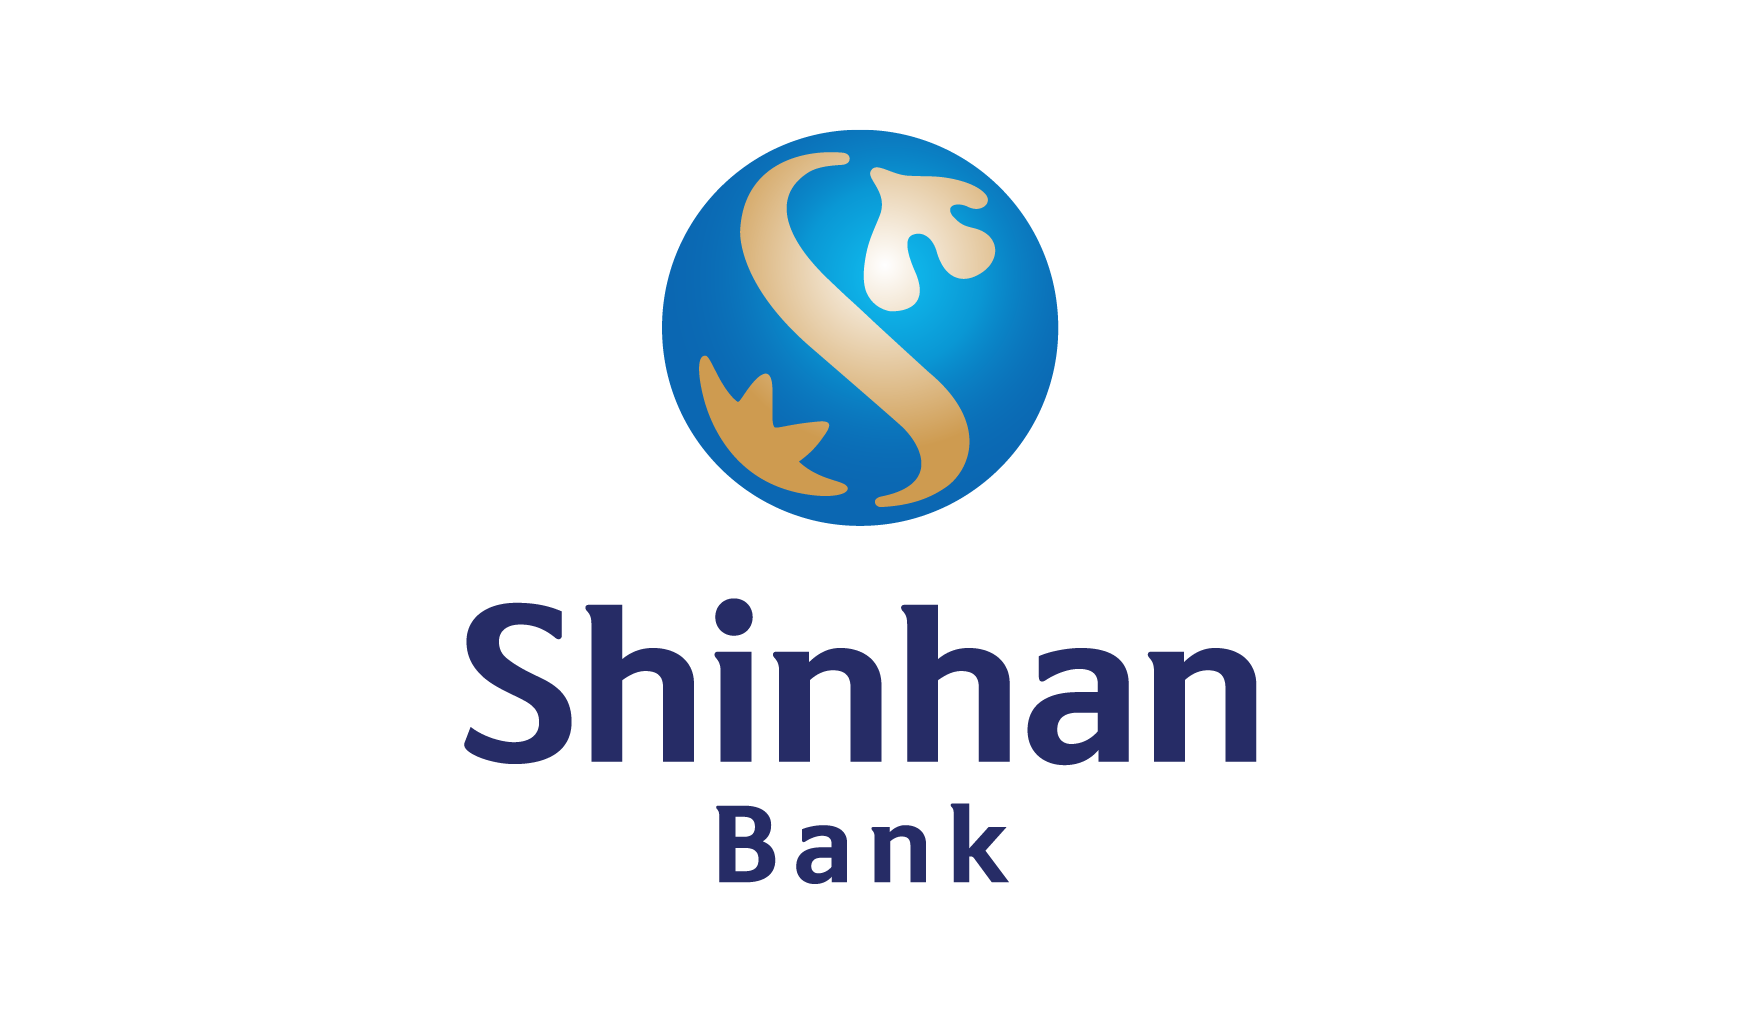 Shinhan Bank Vietnam Ltd.